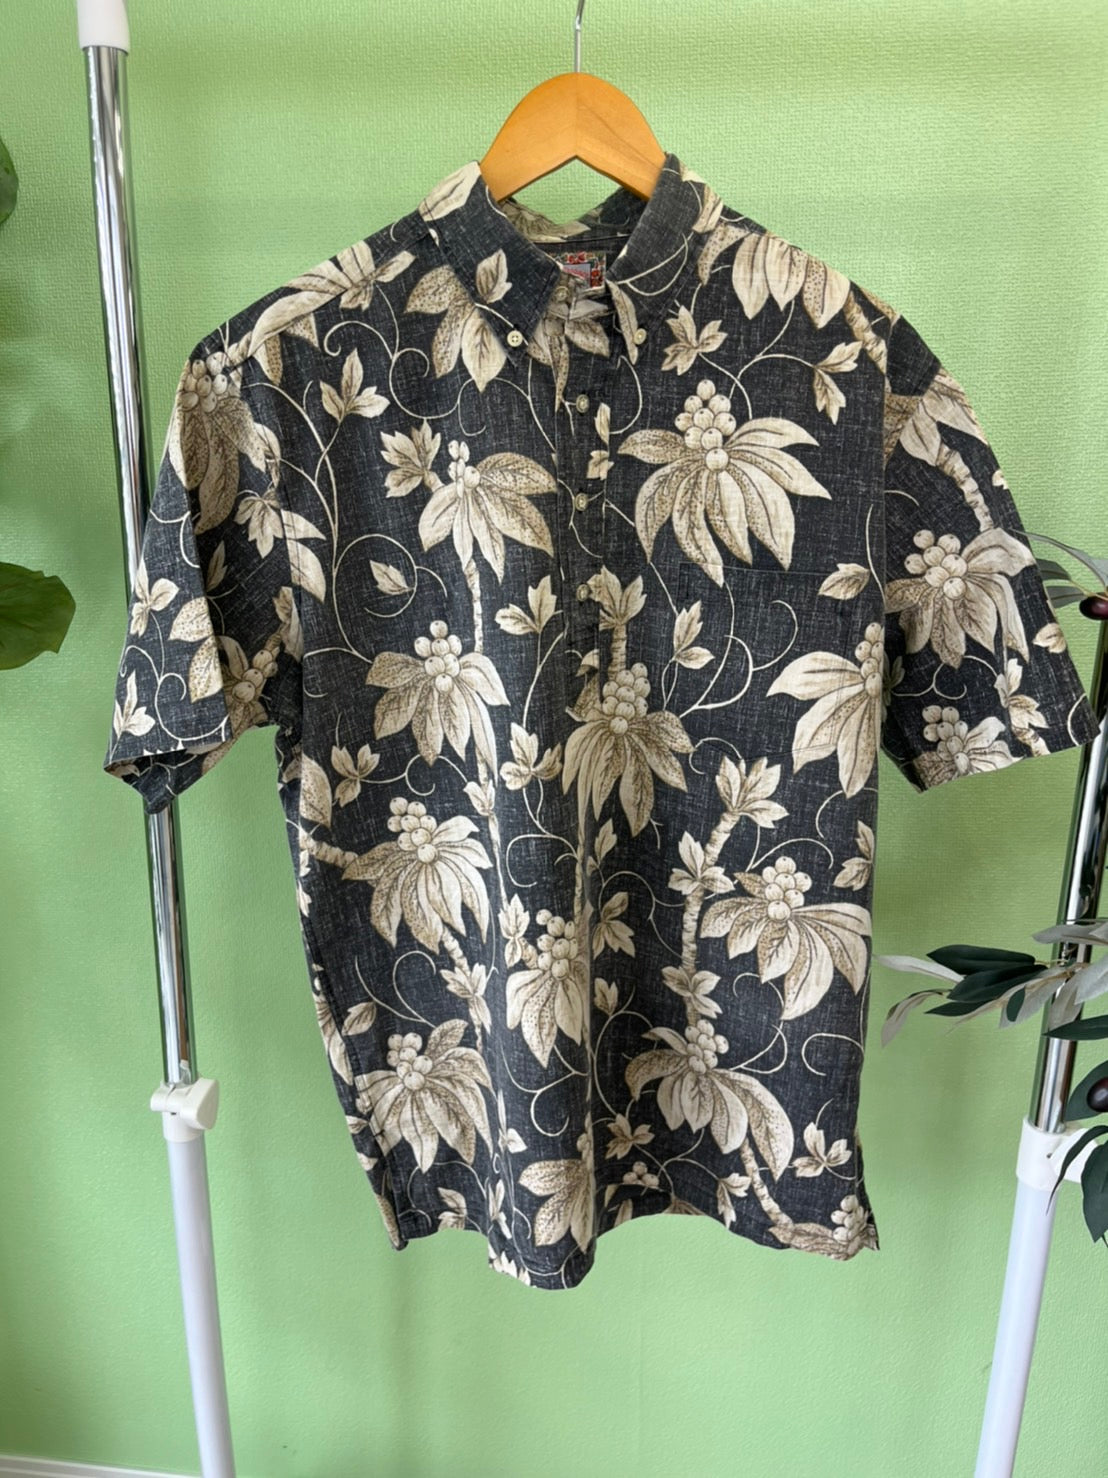 【reyn spooner】 All Over Pattan Aloha Shirt design in Hawaii レインスプーナー 総柄 プルオーバー ボタンダウン アロハシャツ